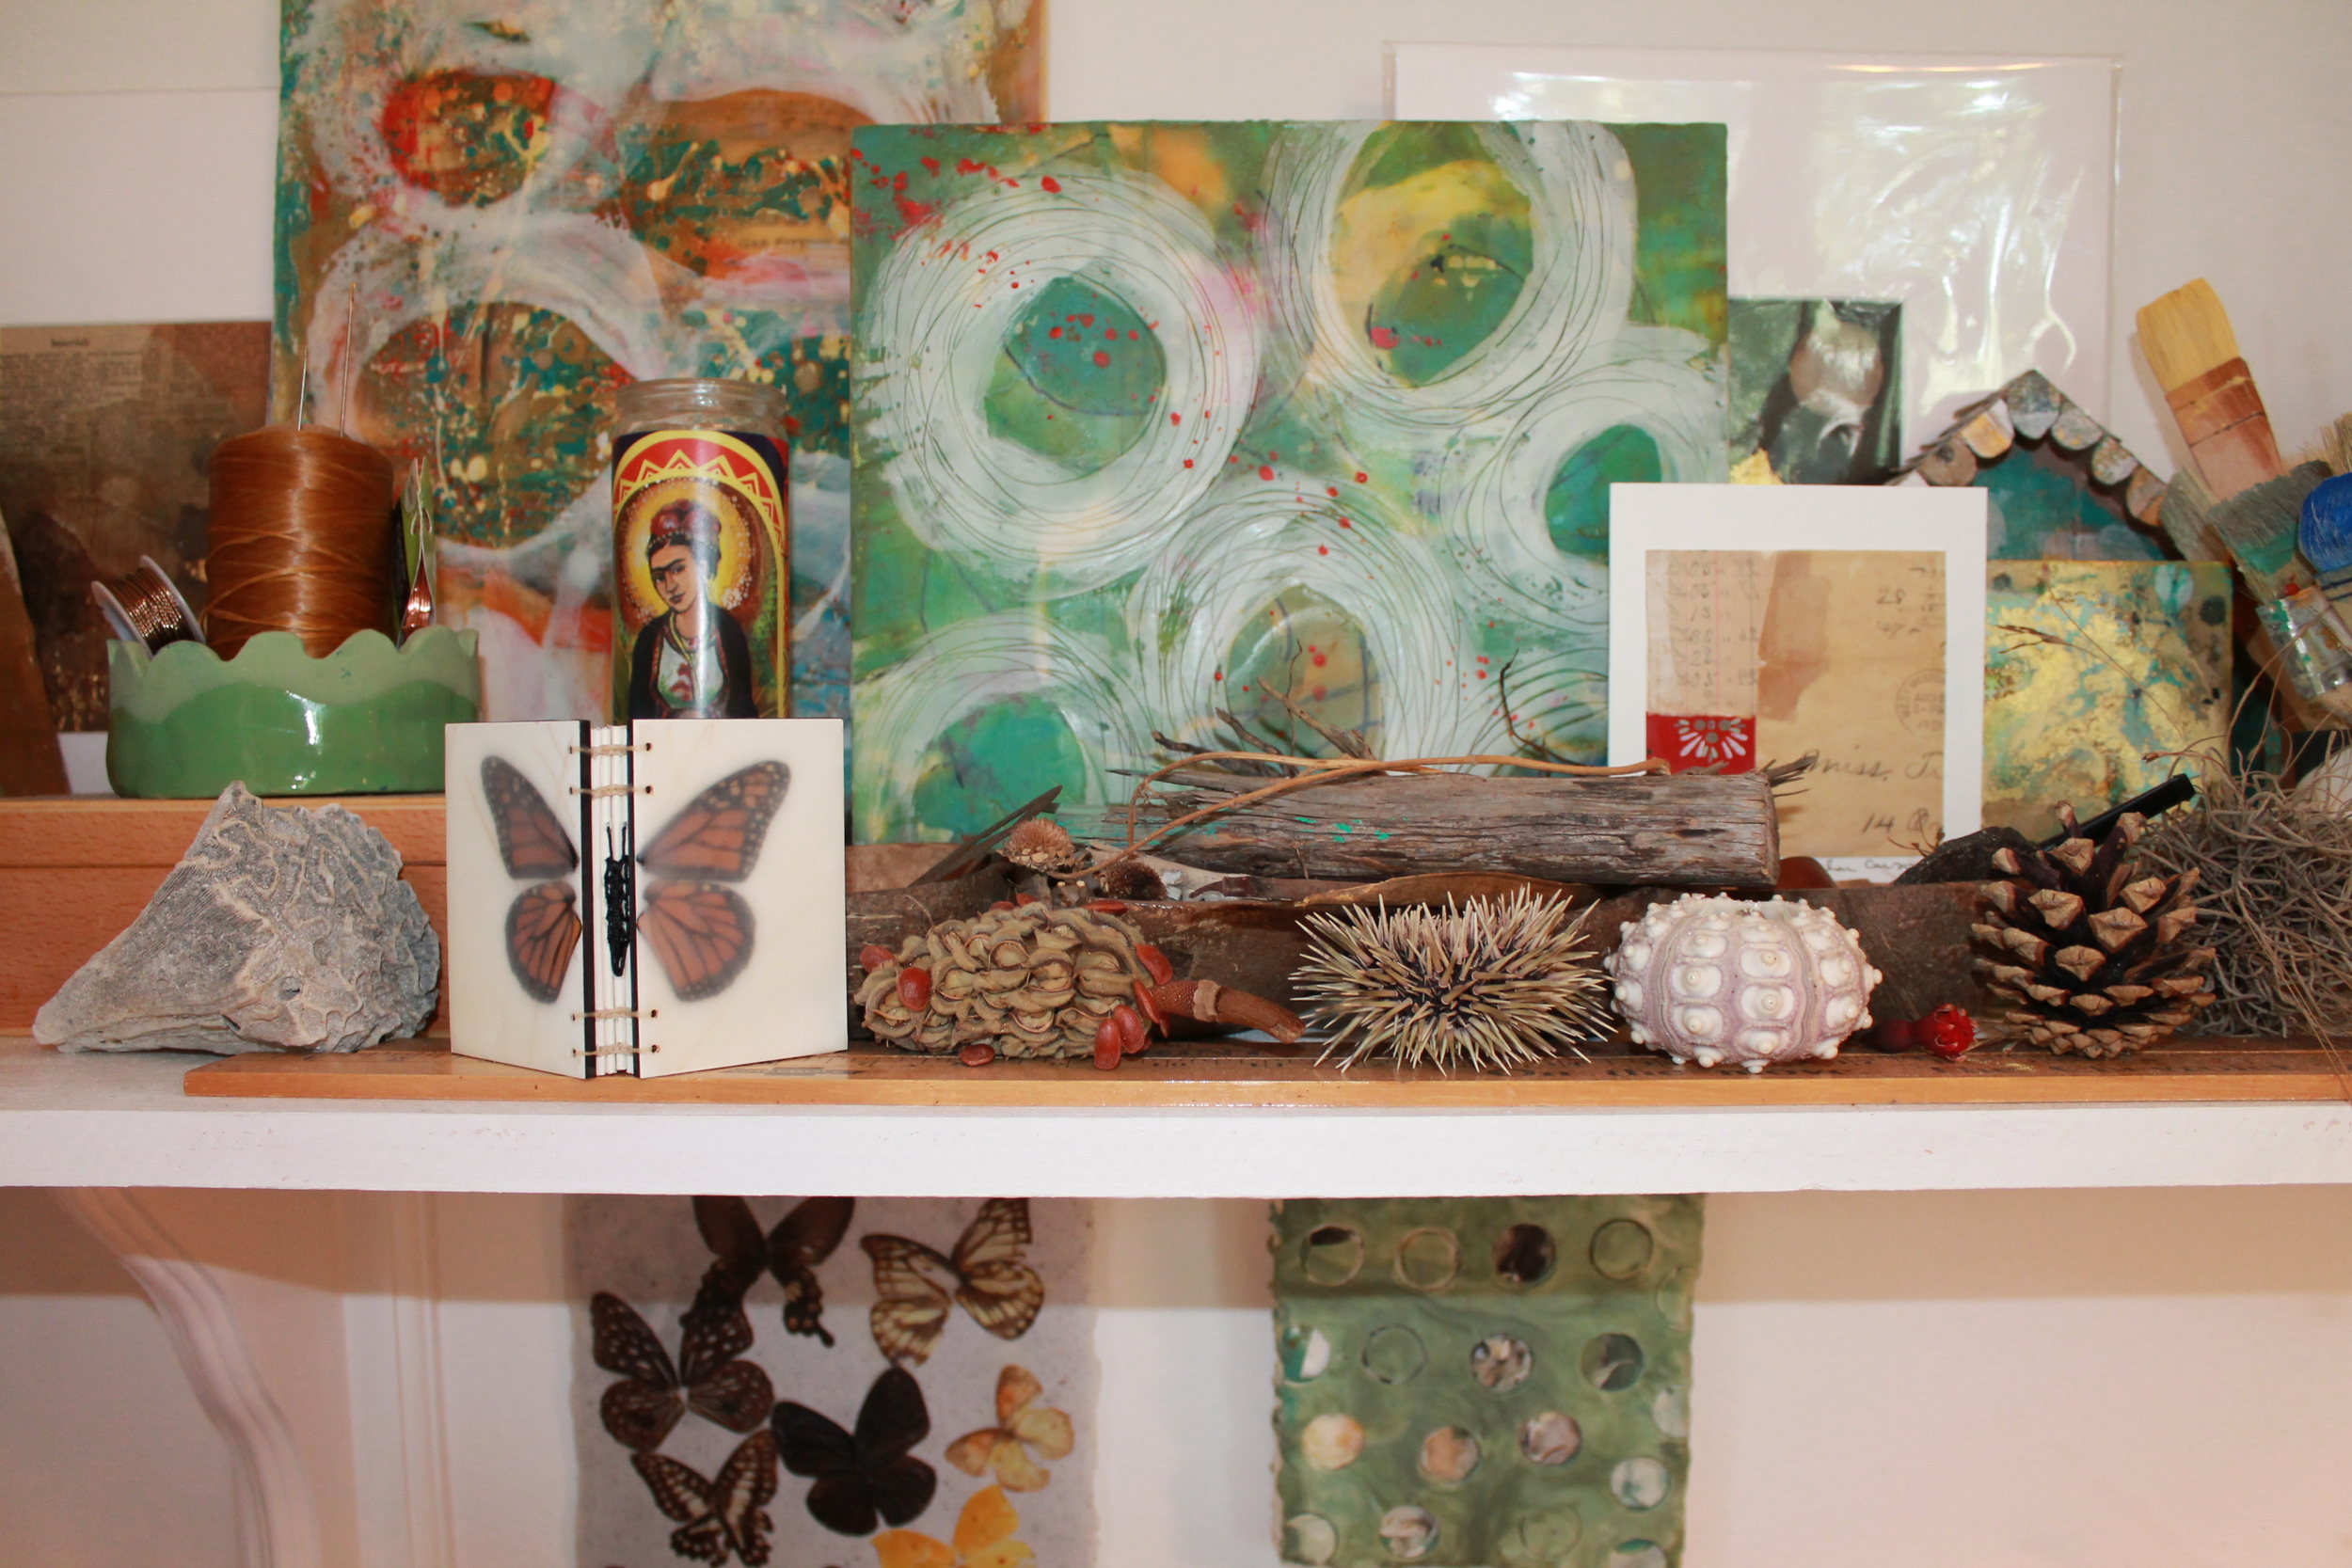  That beautiful hand-bound butterfly journal is by artist  Erin Keane  